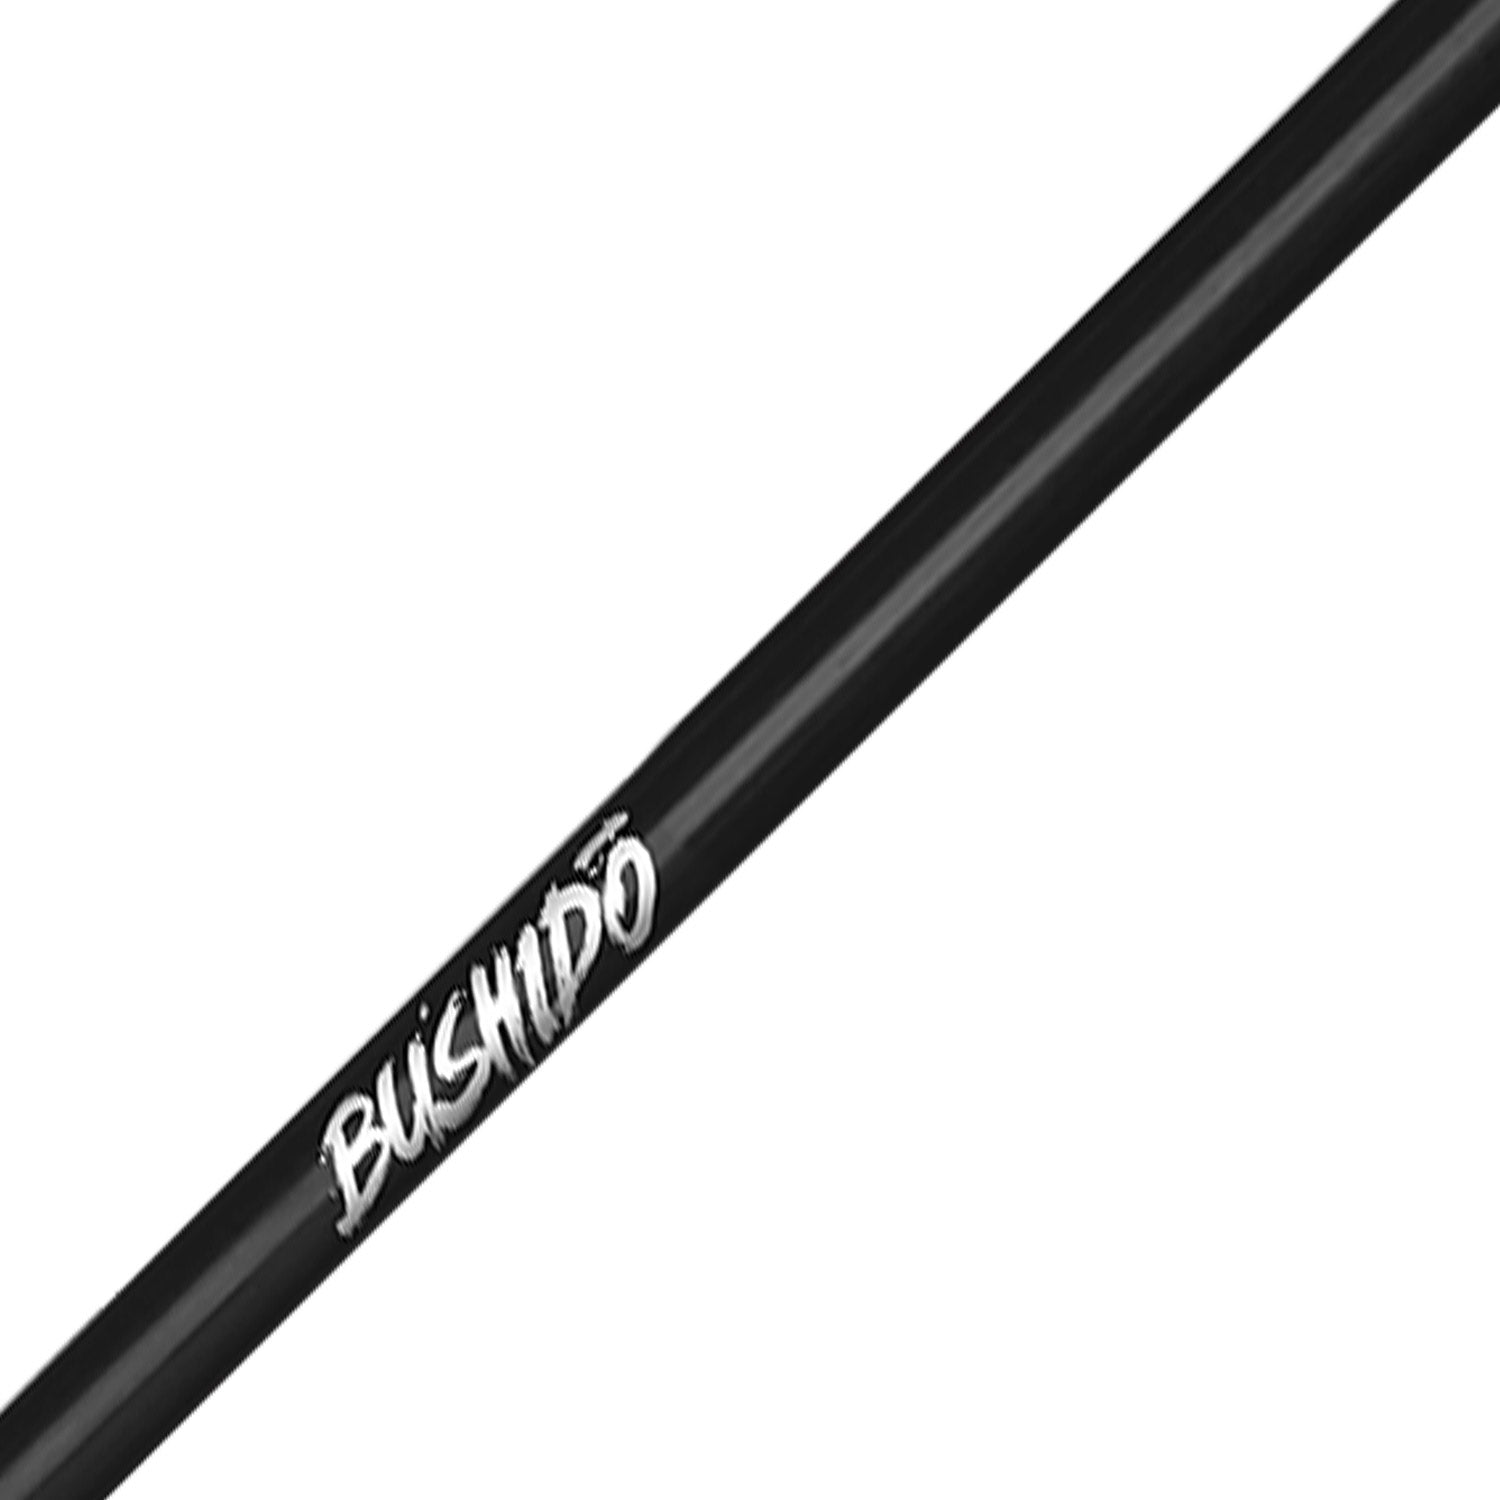 Bushido Popping/Crank Bait Rod Blank CB78/8-15